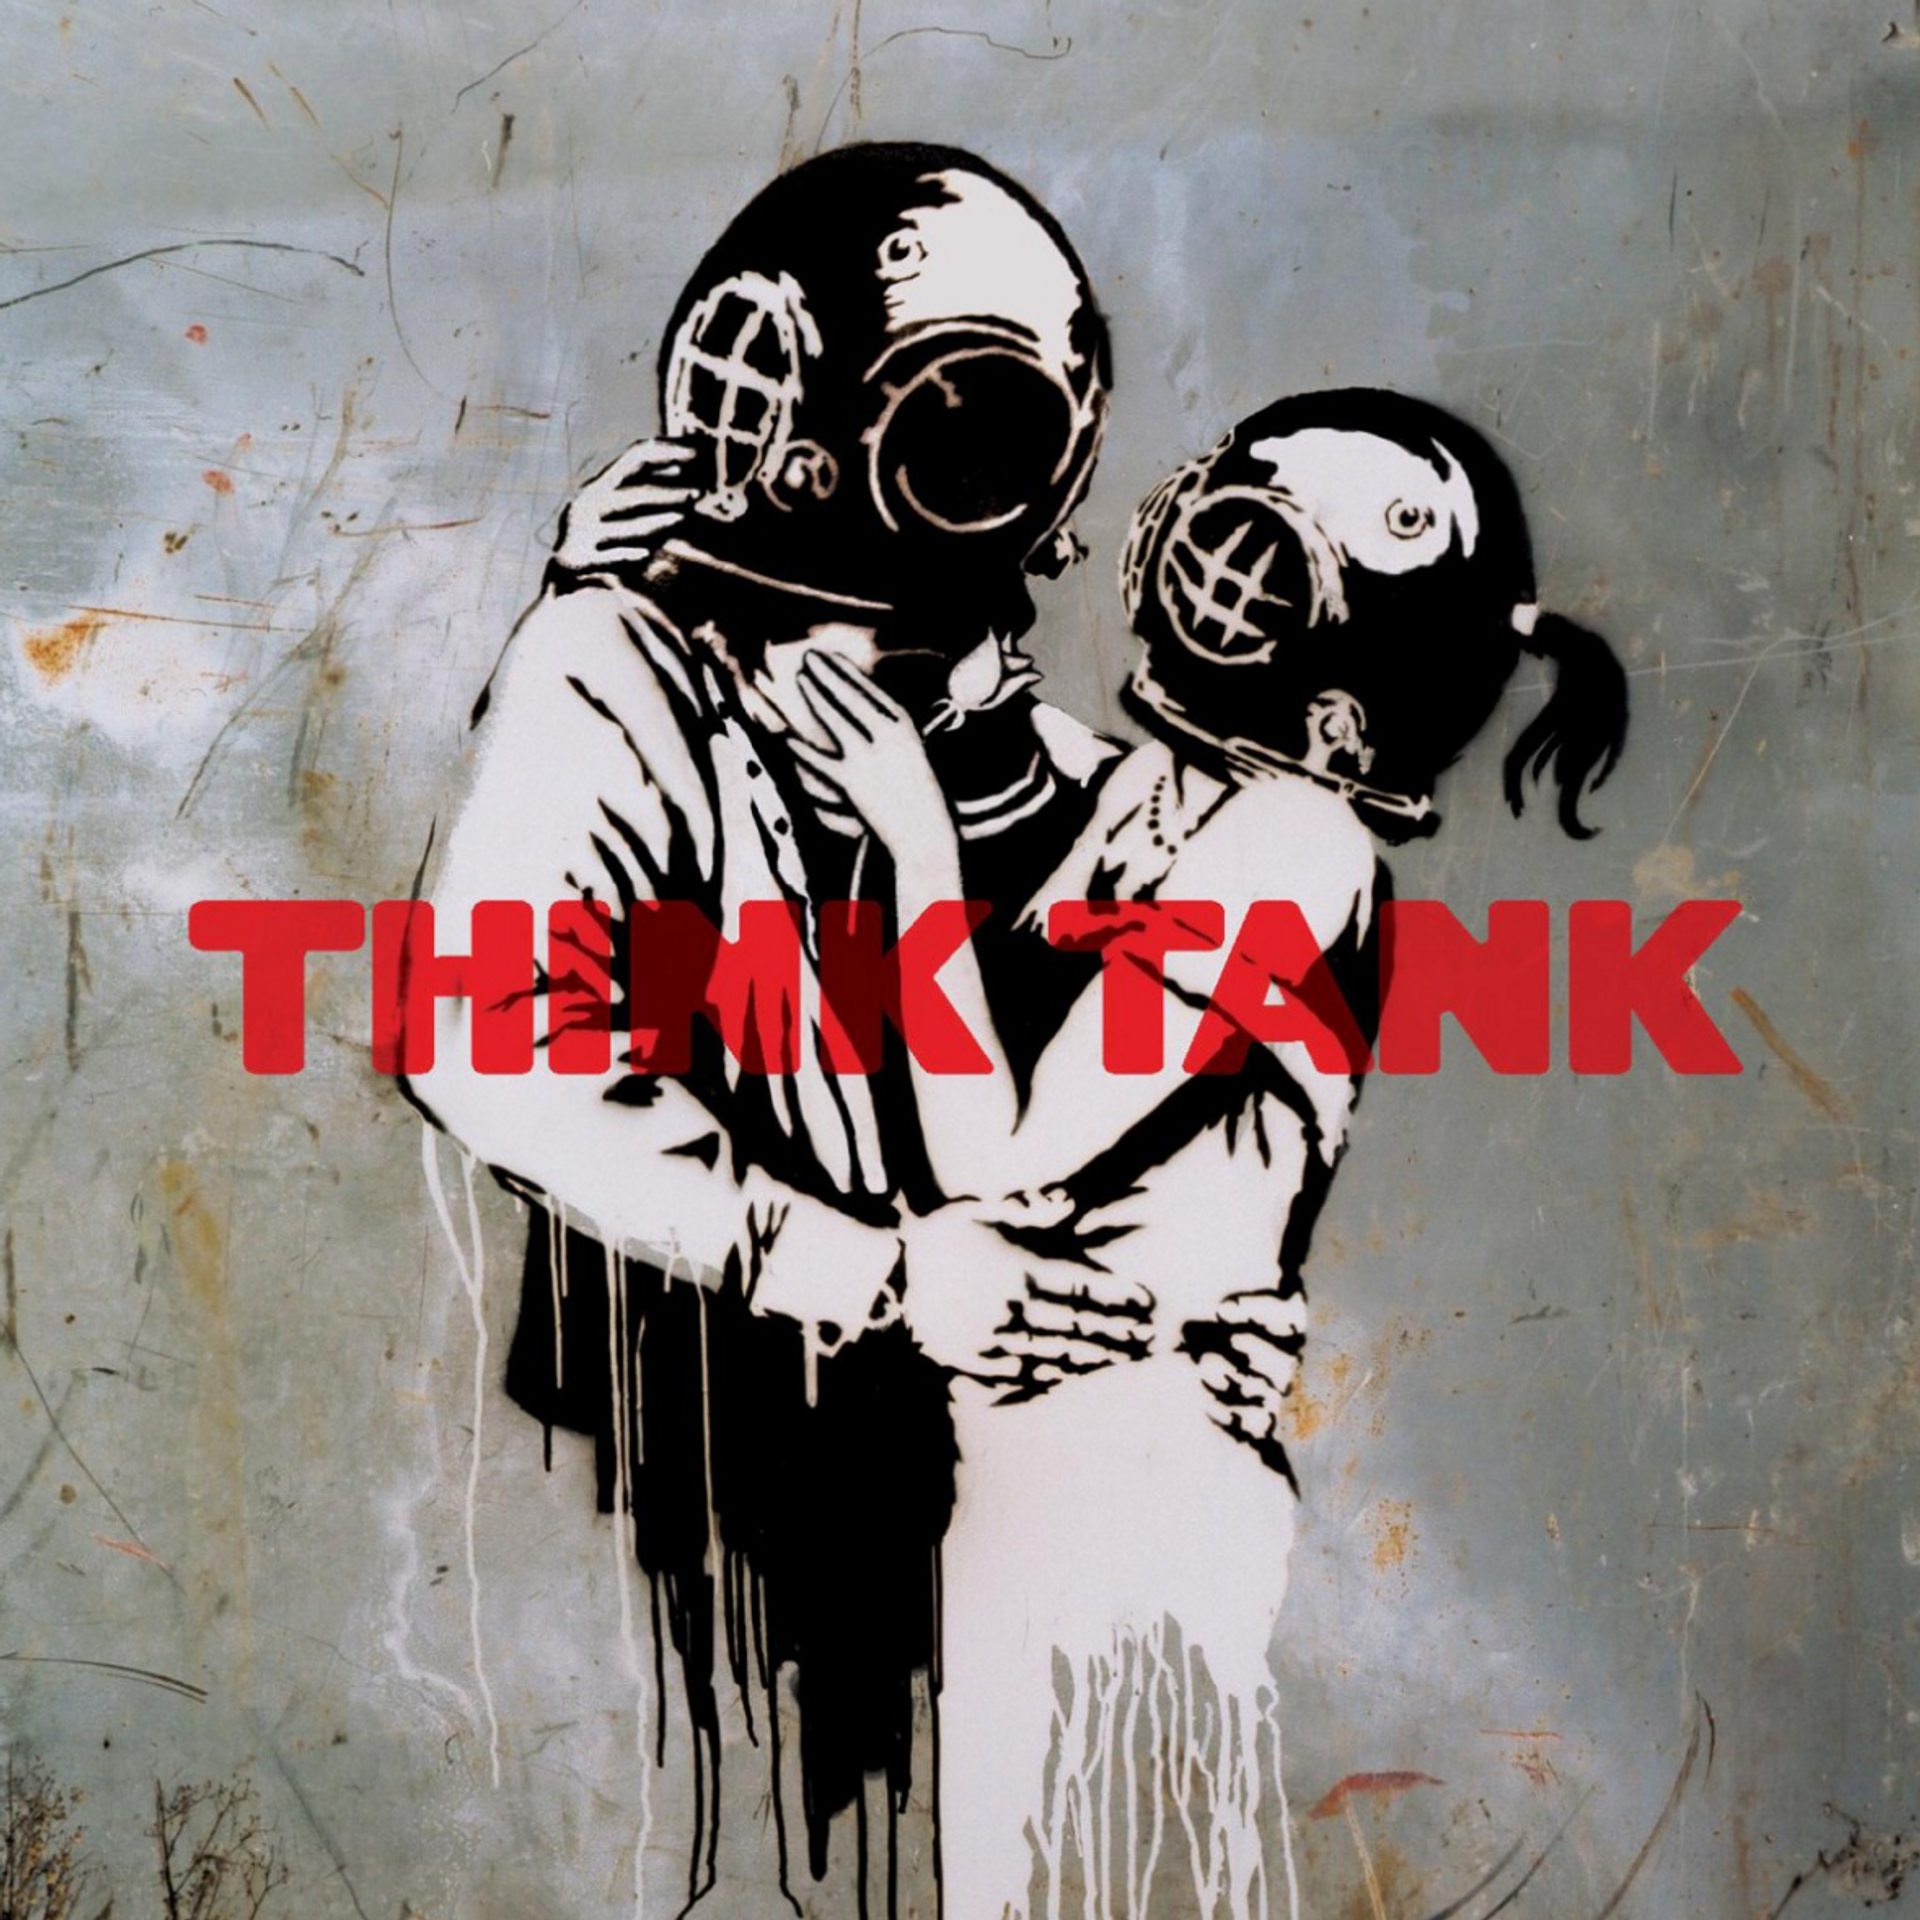 Think Tank by Blur